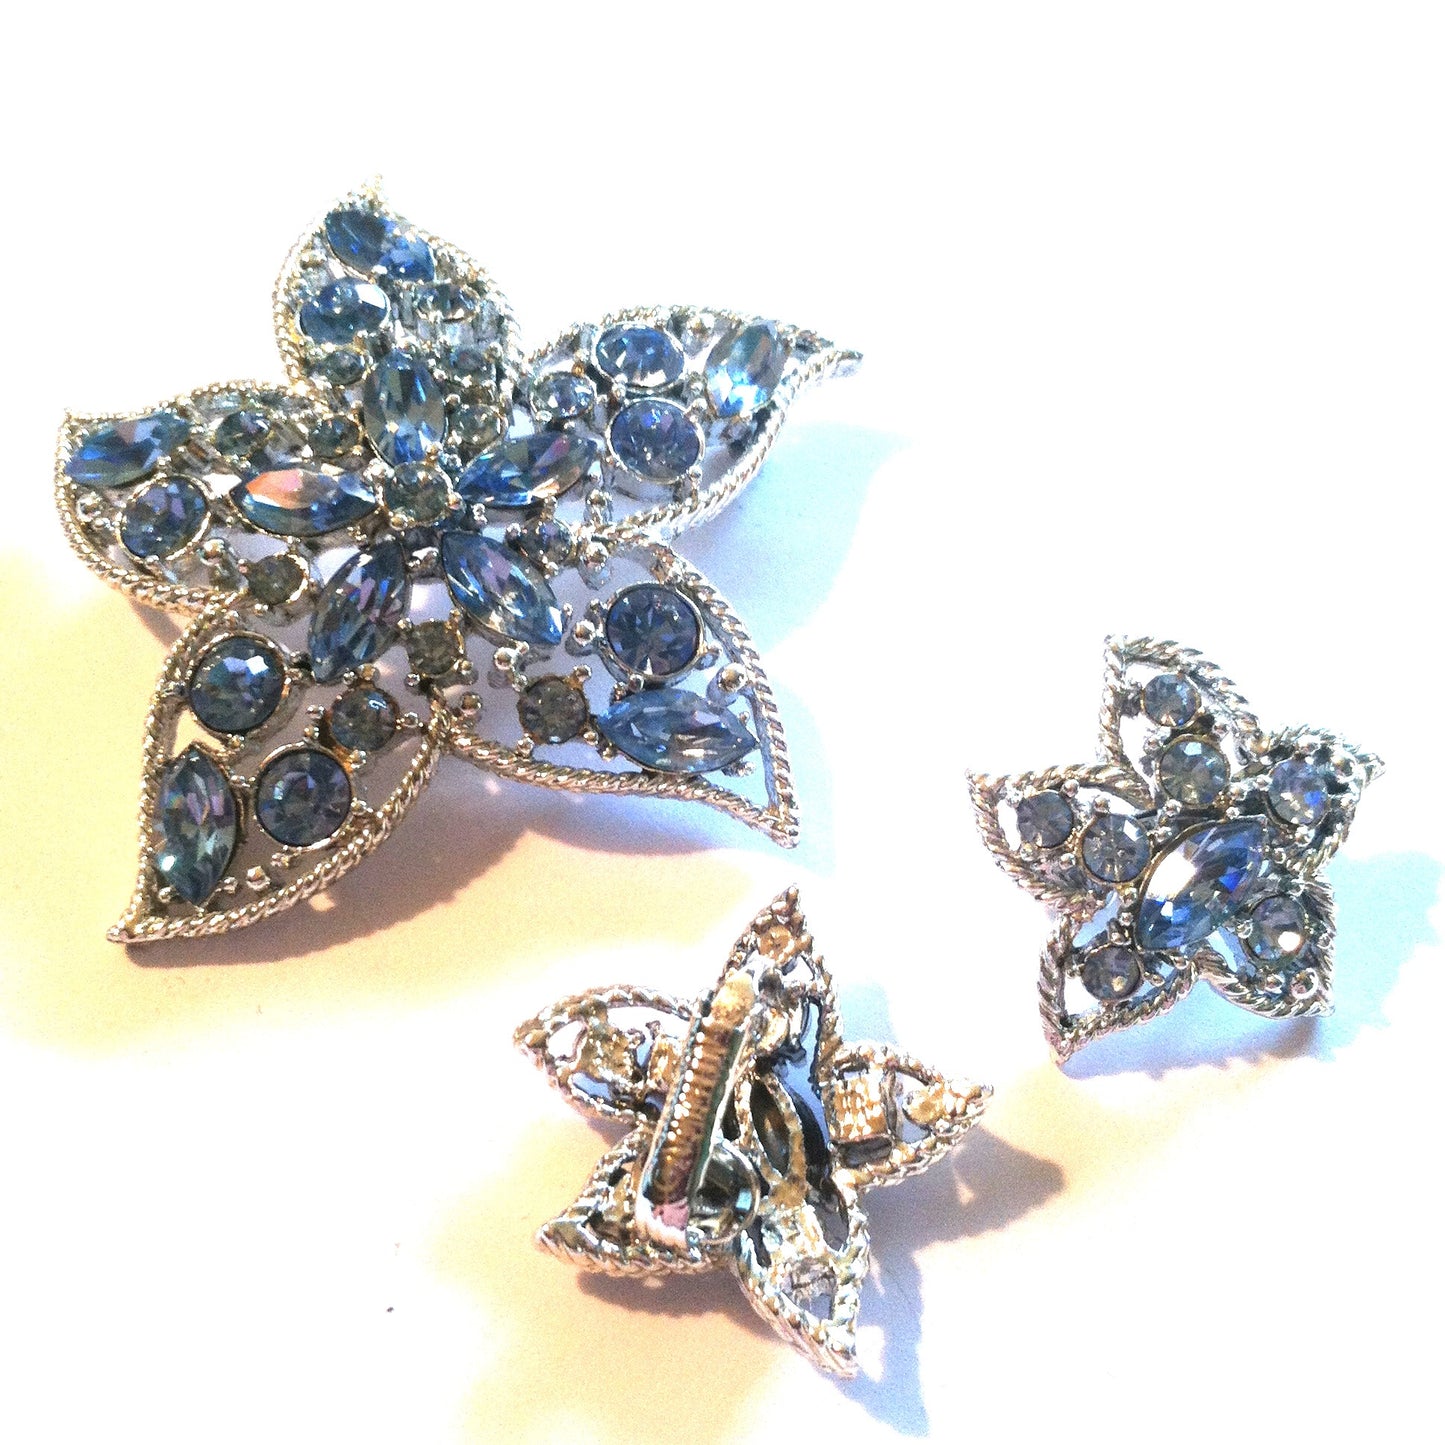 Star Fire Blue Rhinestone Brooch and Clip Earrings circa 1960s